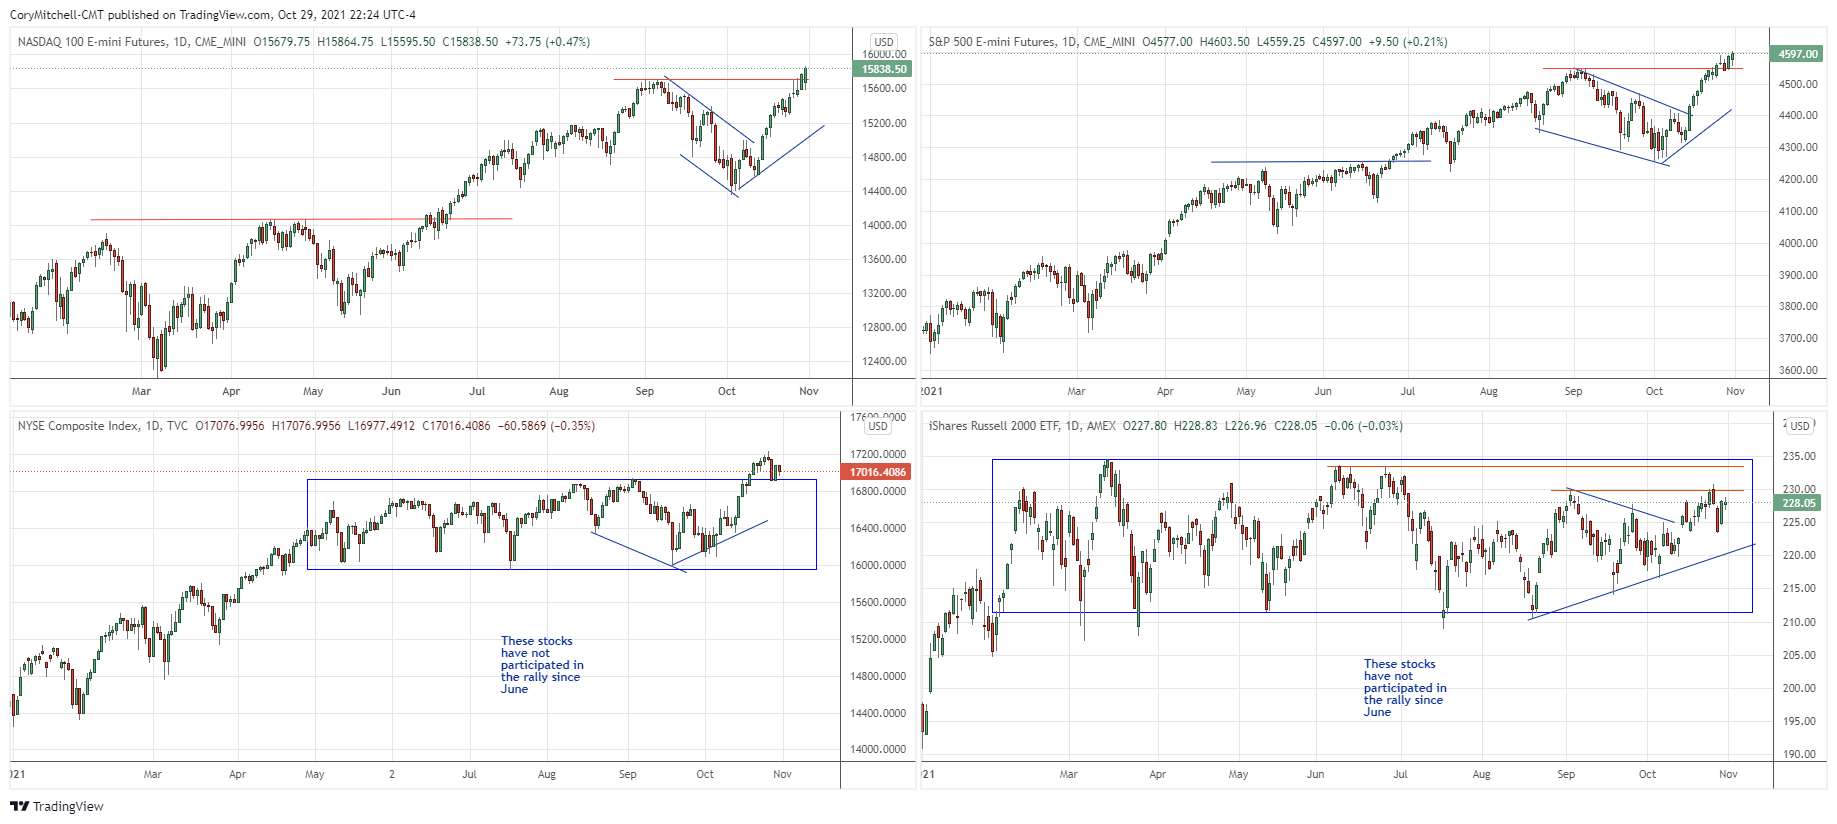 major stock market index comparison Oct. 29